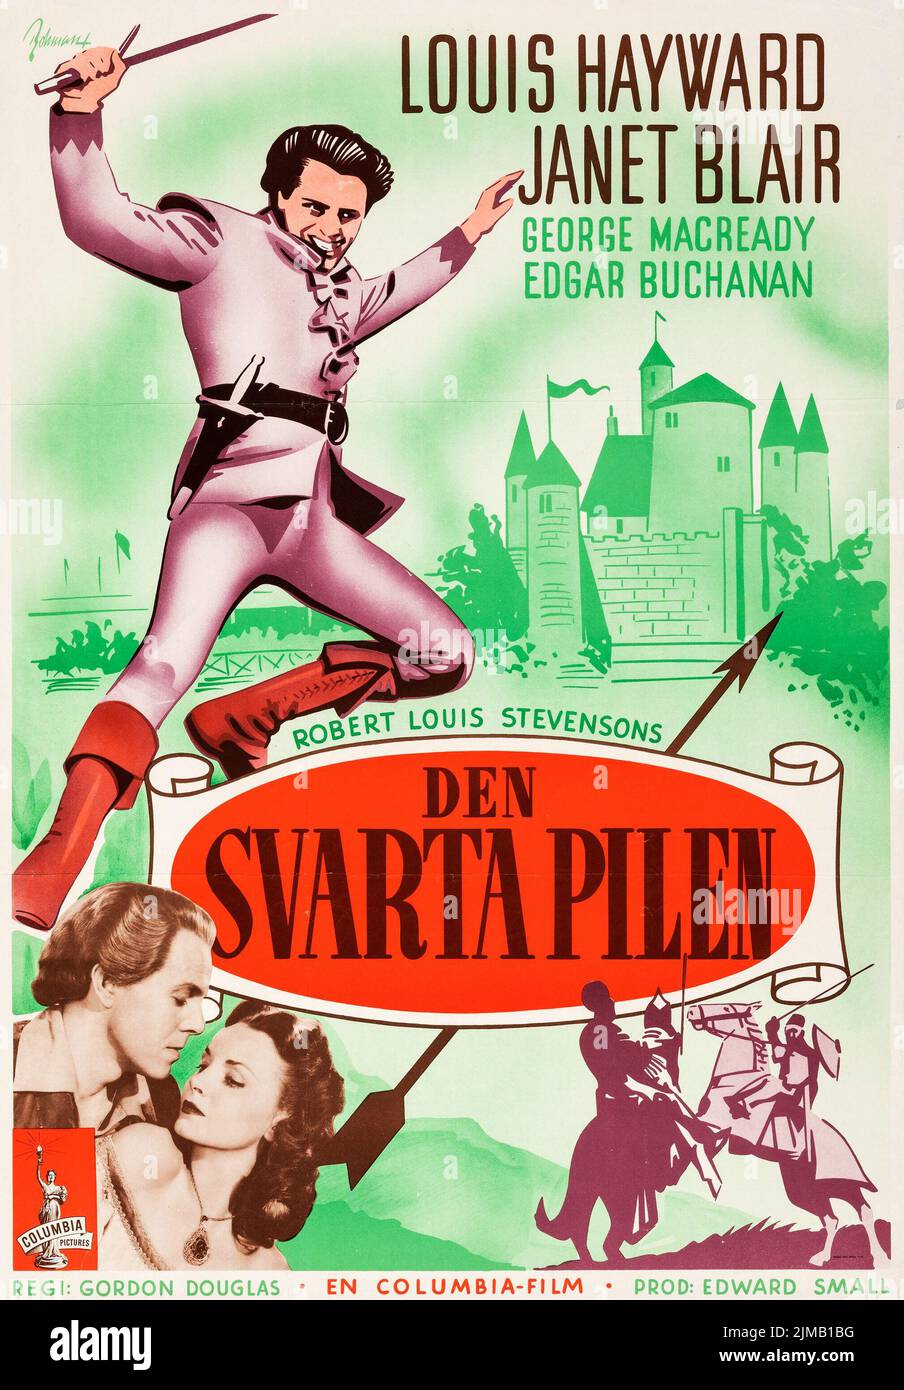 Den svarta pilen - The Black Arrow (Columbia, 1948). Swedish film poster. Eric Rohman Artwork. Louis Hayward, Janet Blair. Stock Photo